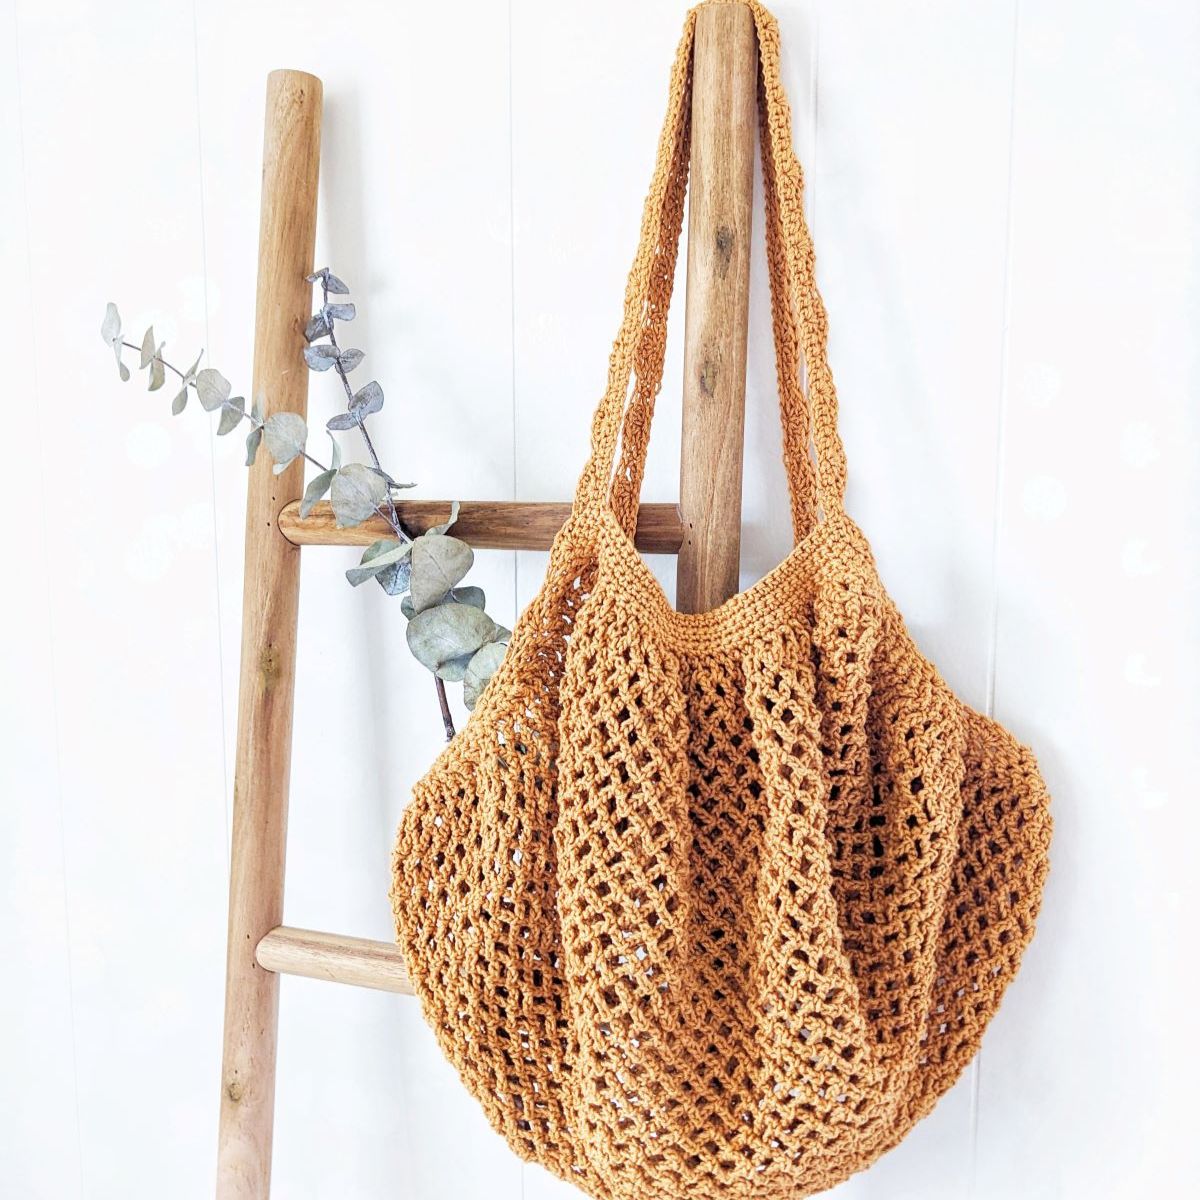 A crochet market bag pattern.